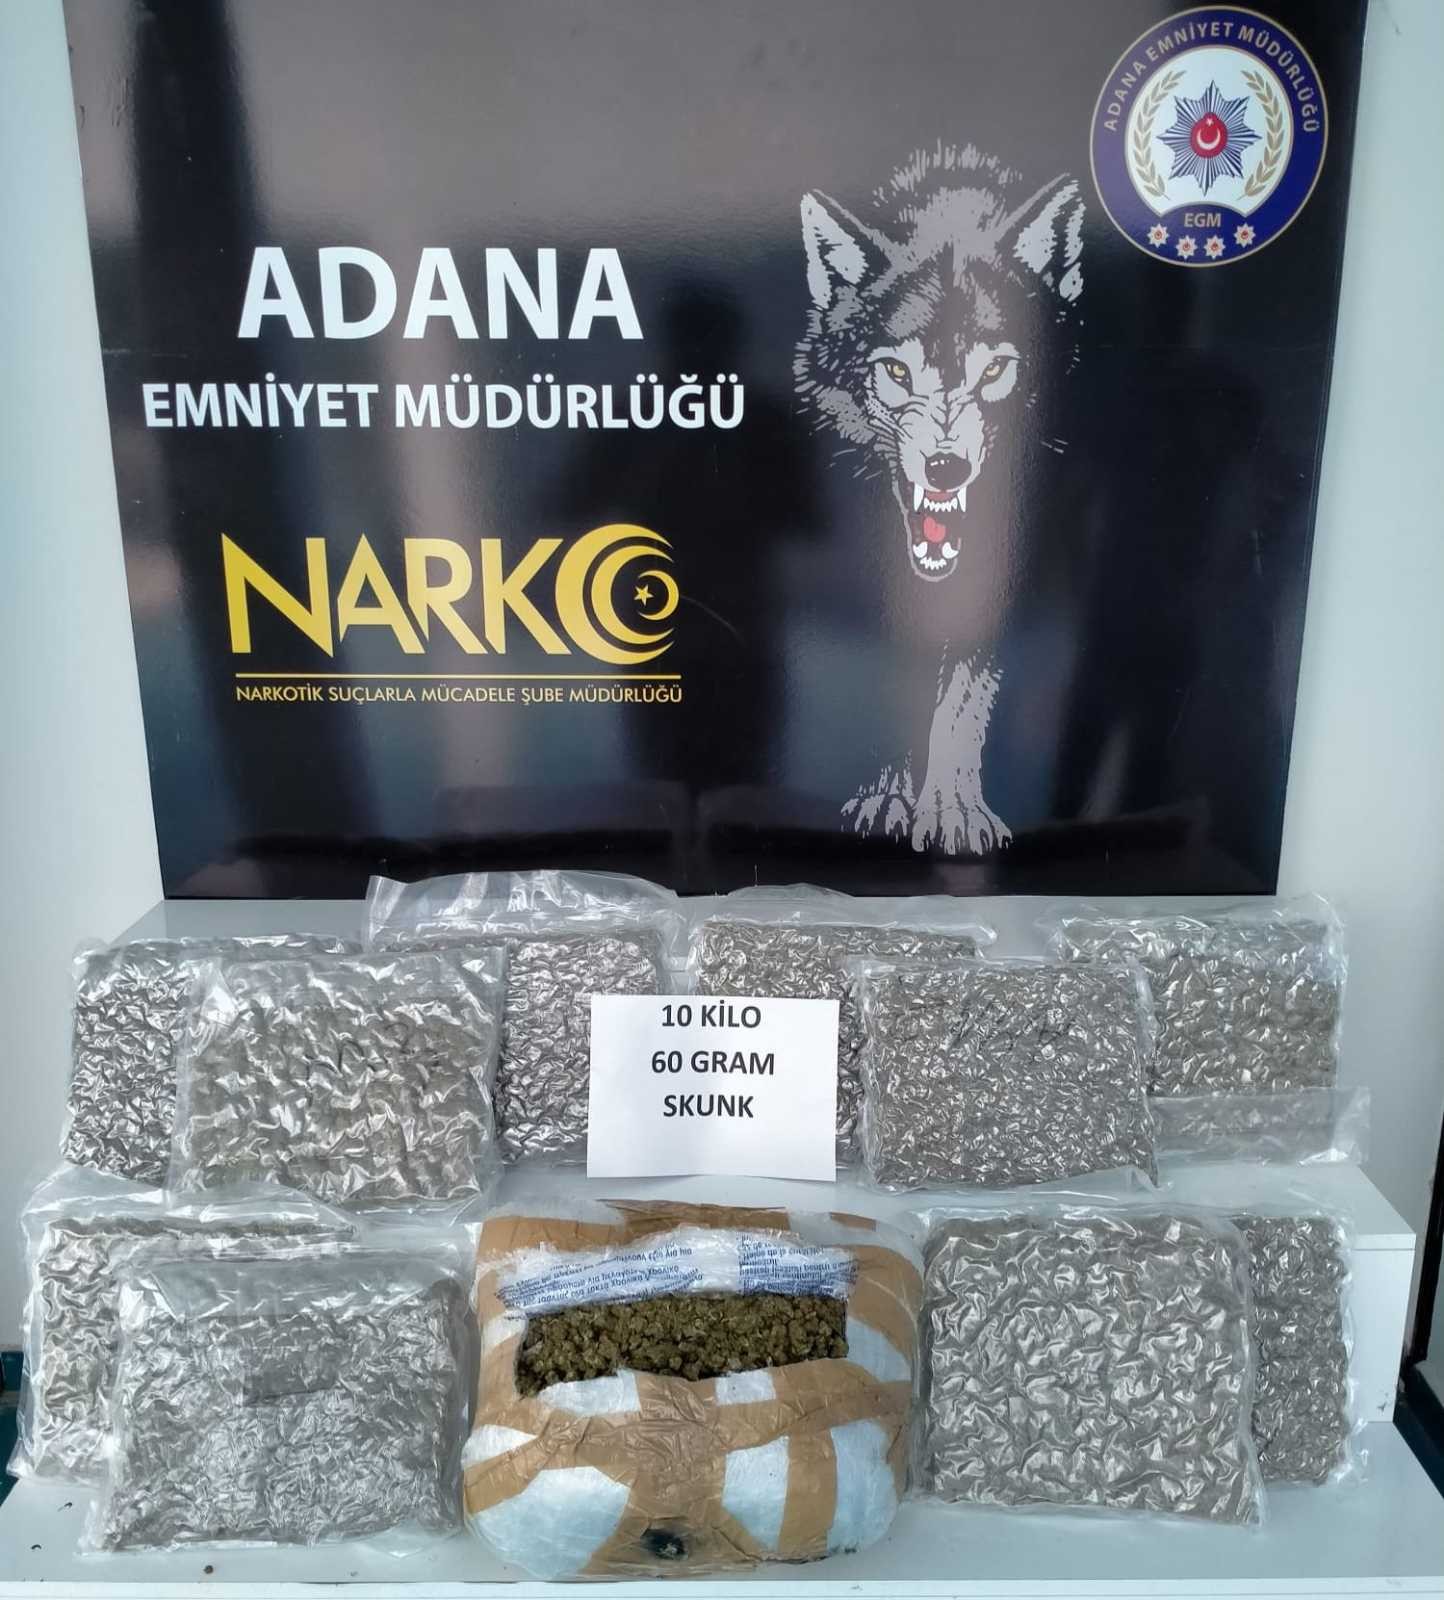 Adana’da 10 kilo 60 gram skunk ele geçirildi #adana